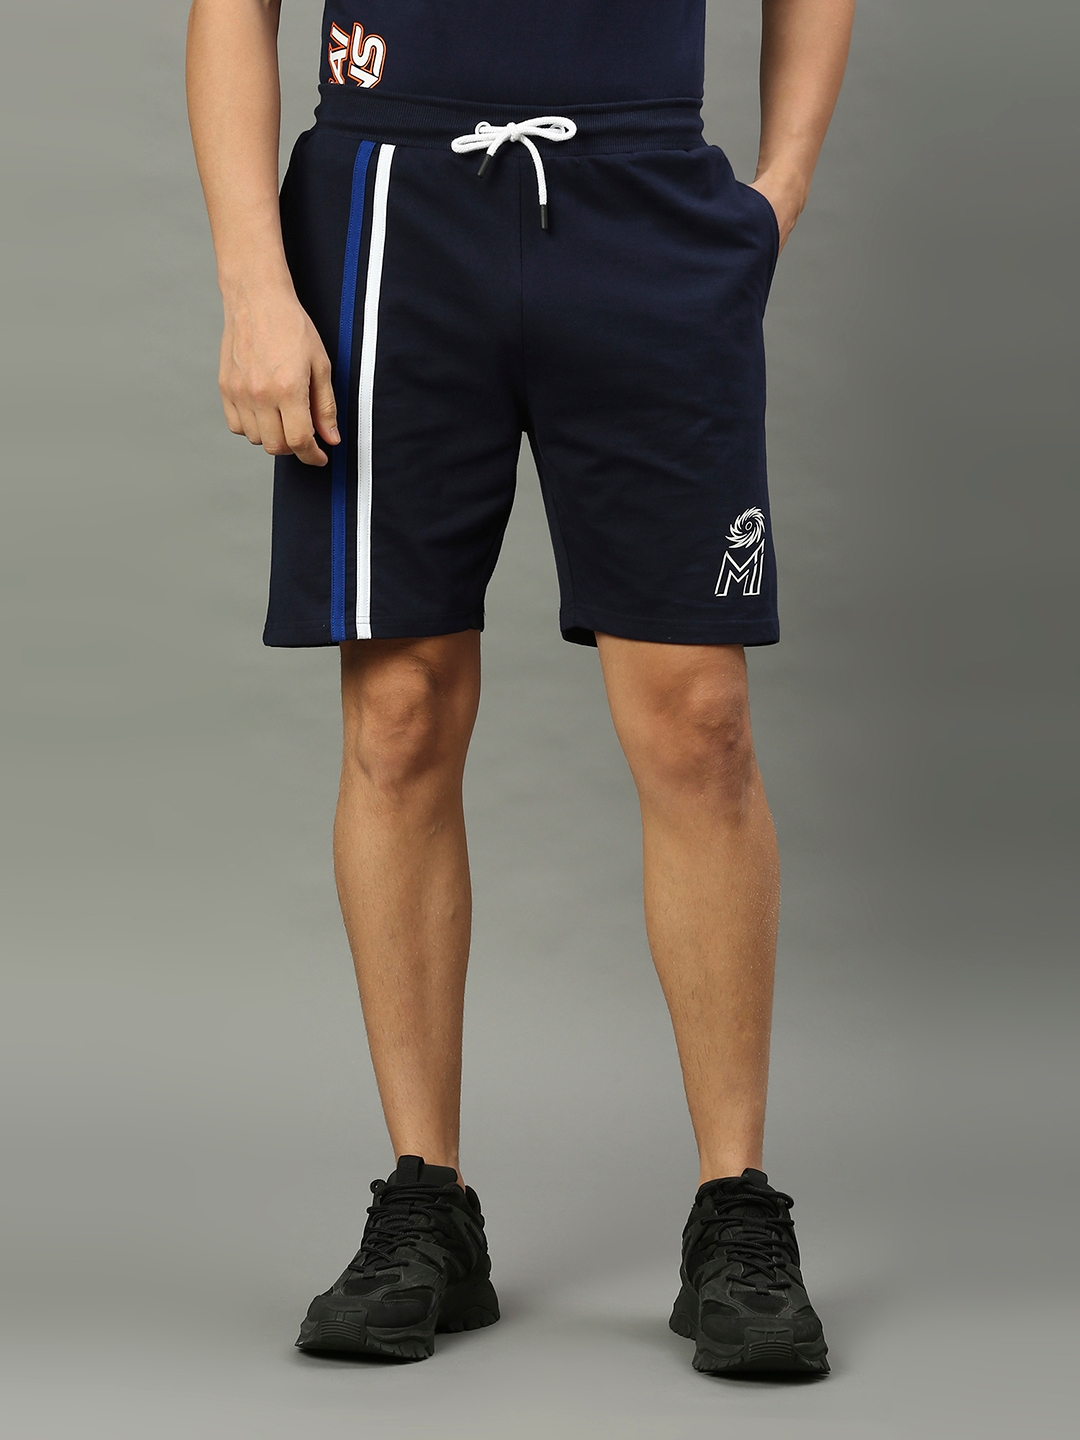 FANCODE | MI: Men Navy Blue Striped Printed Drawstring Shorts